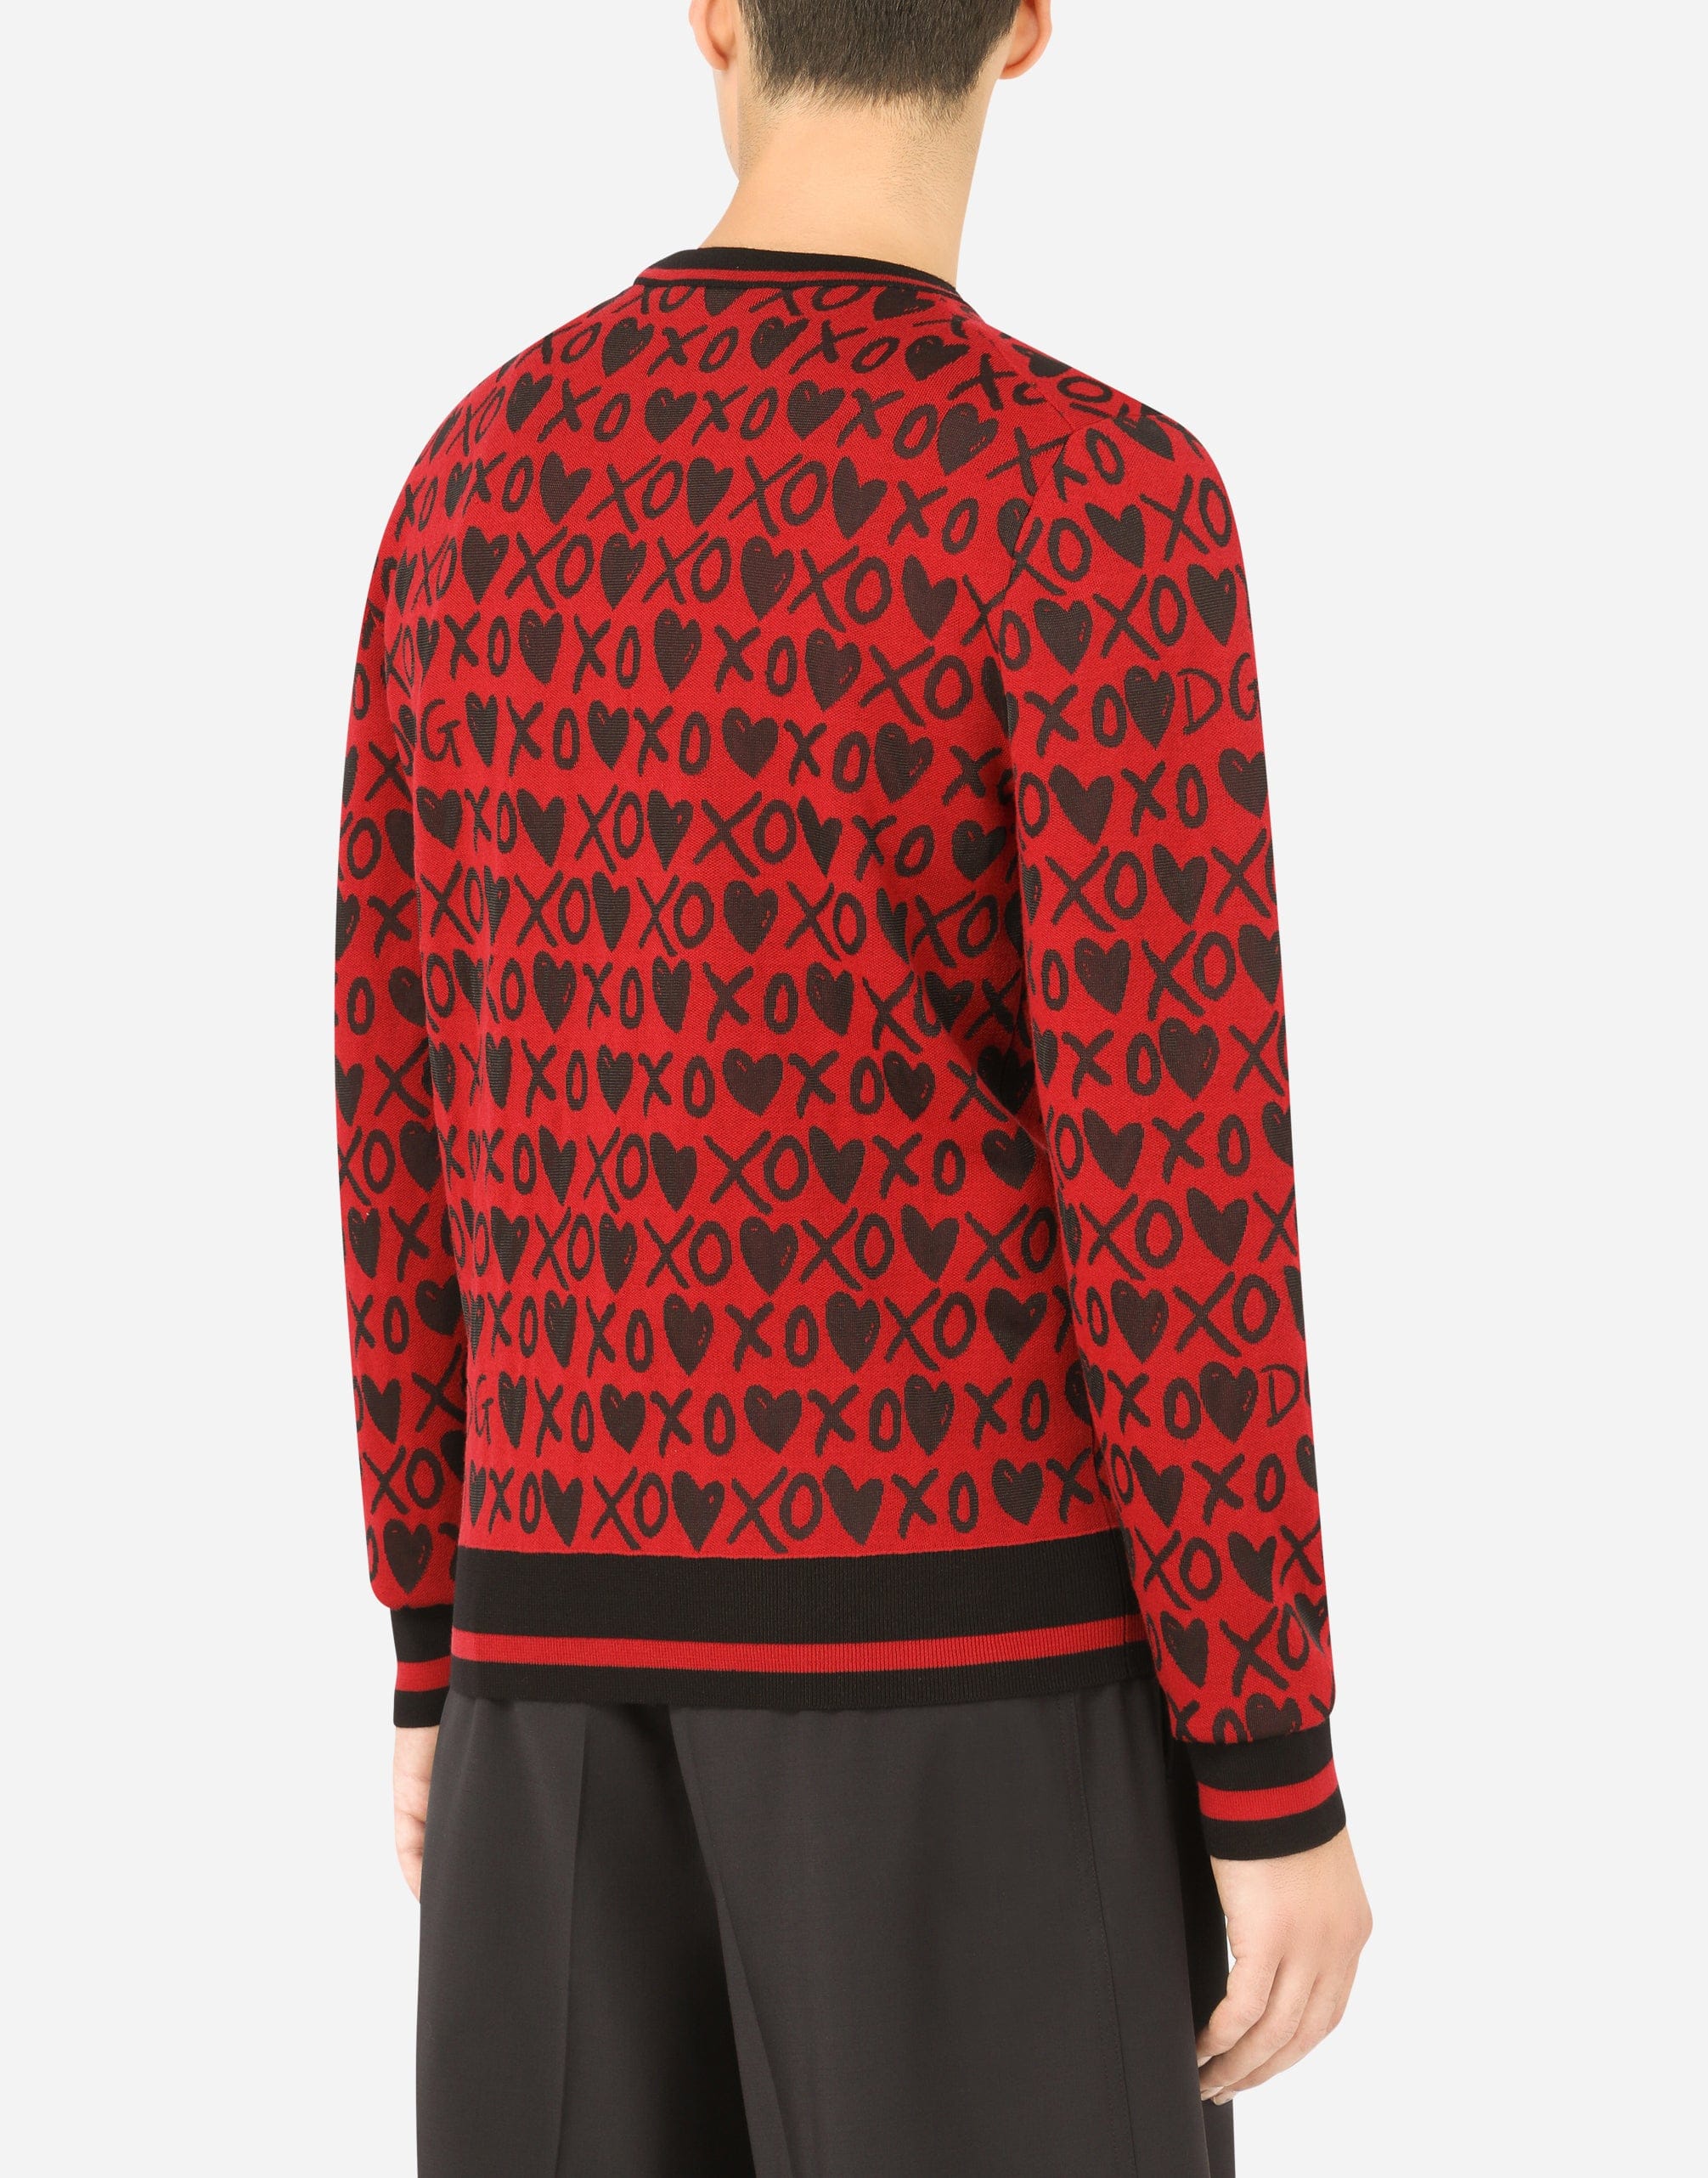 Dolce & Gabbana Red Black XOXO Crew Neck Pullover Sweater